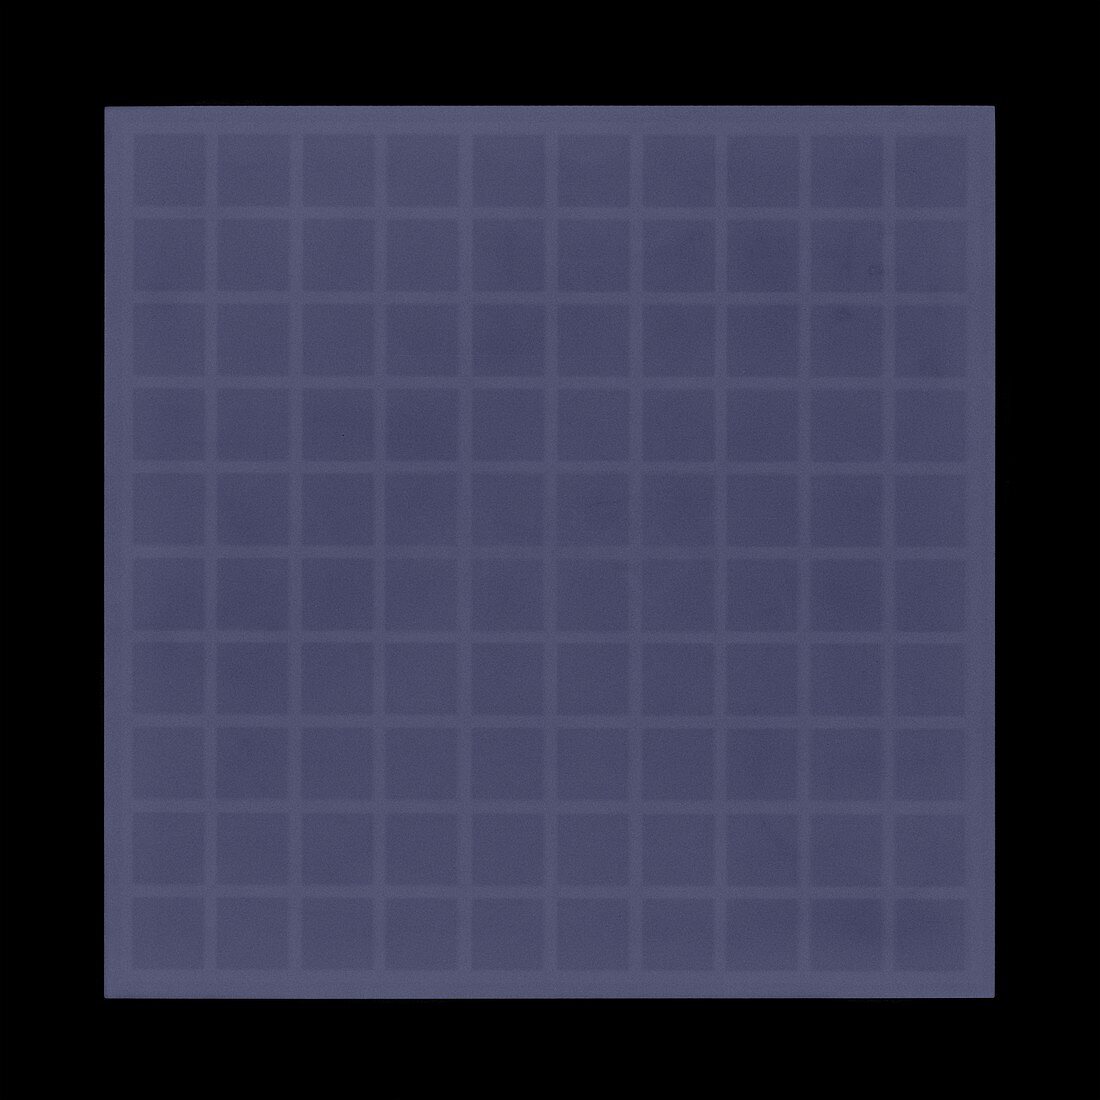 Flat grid, X-ray